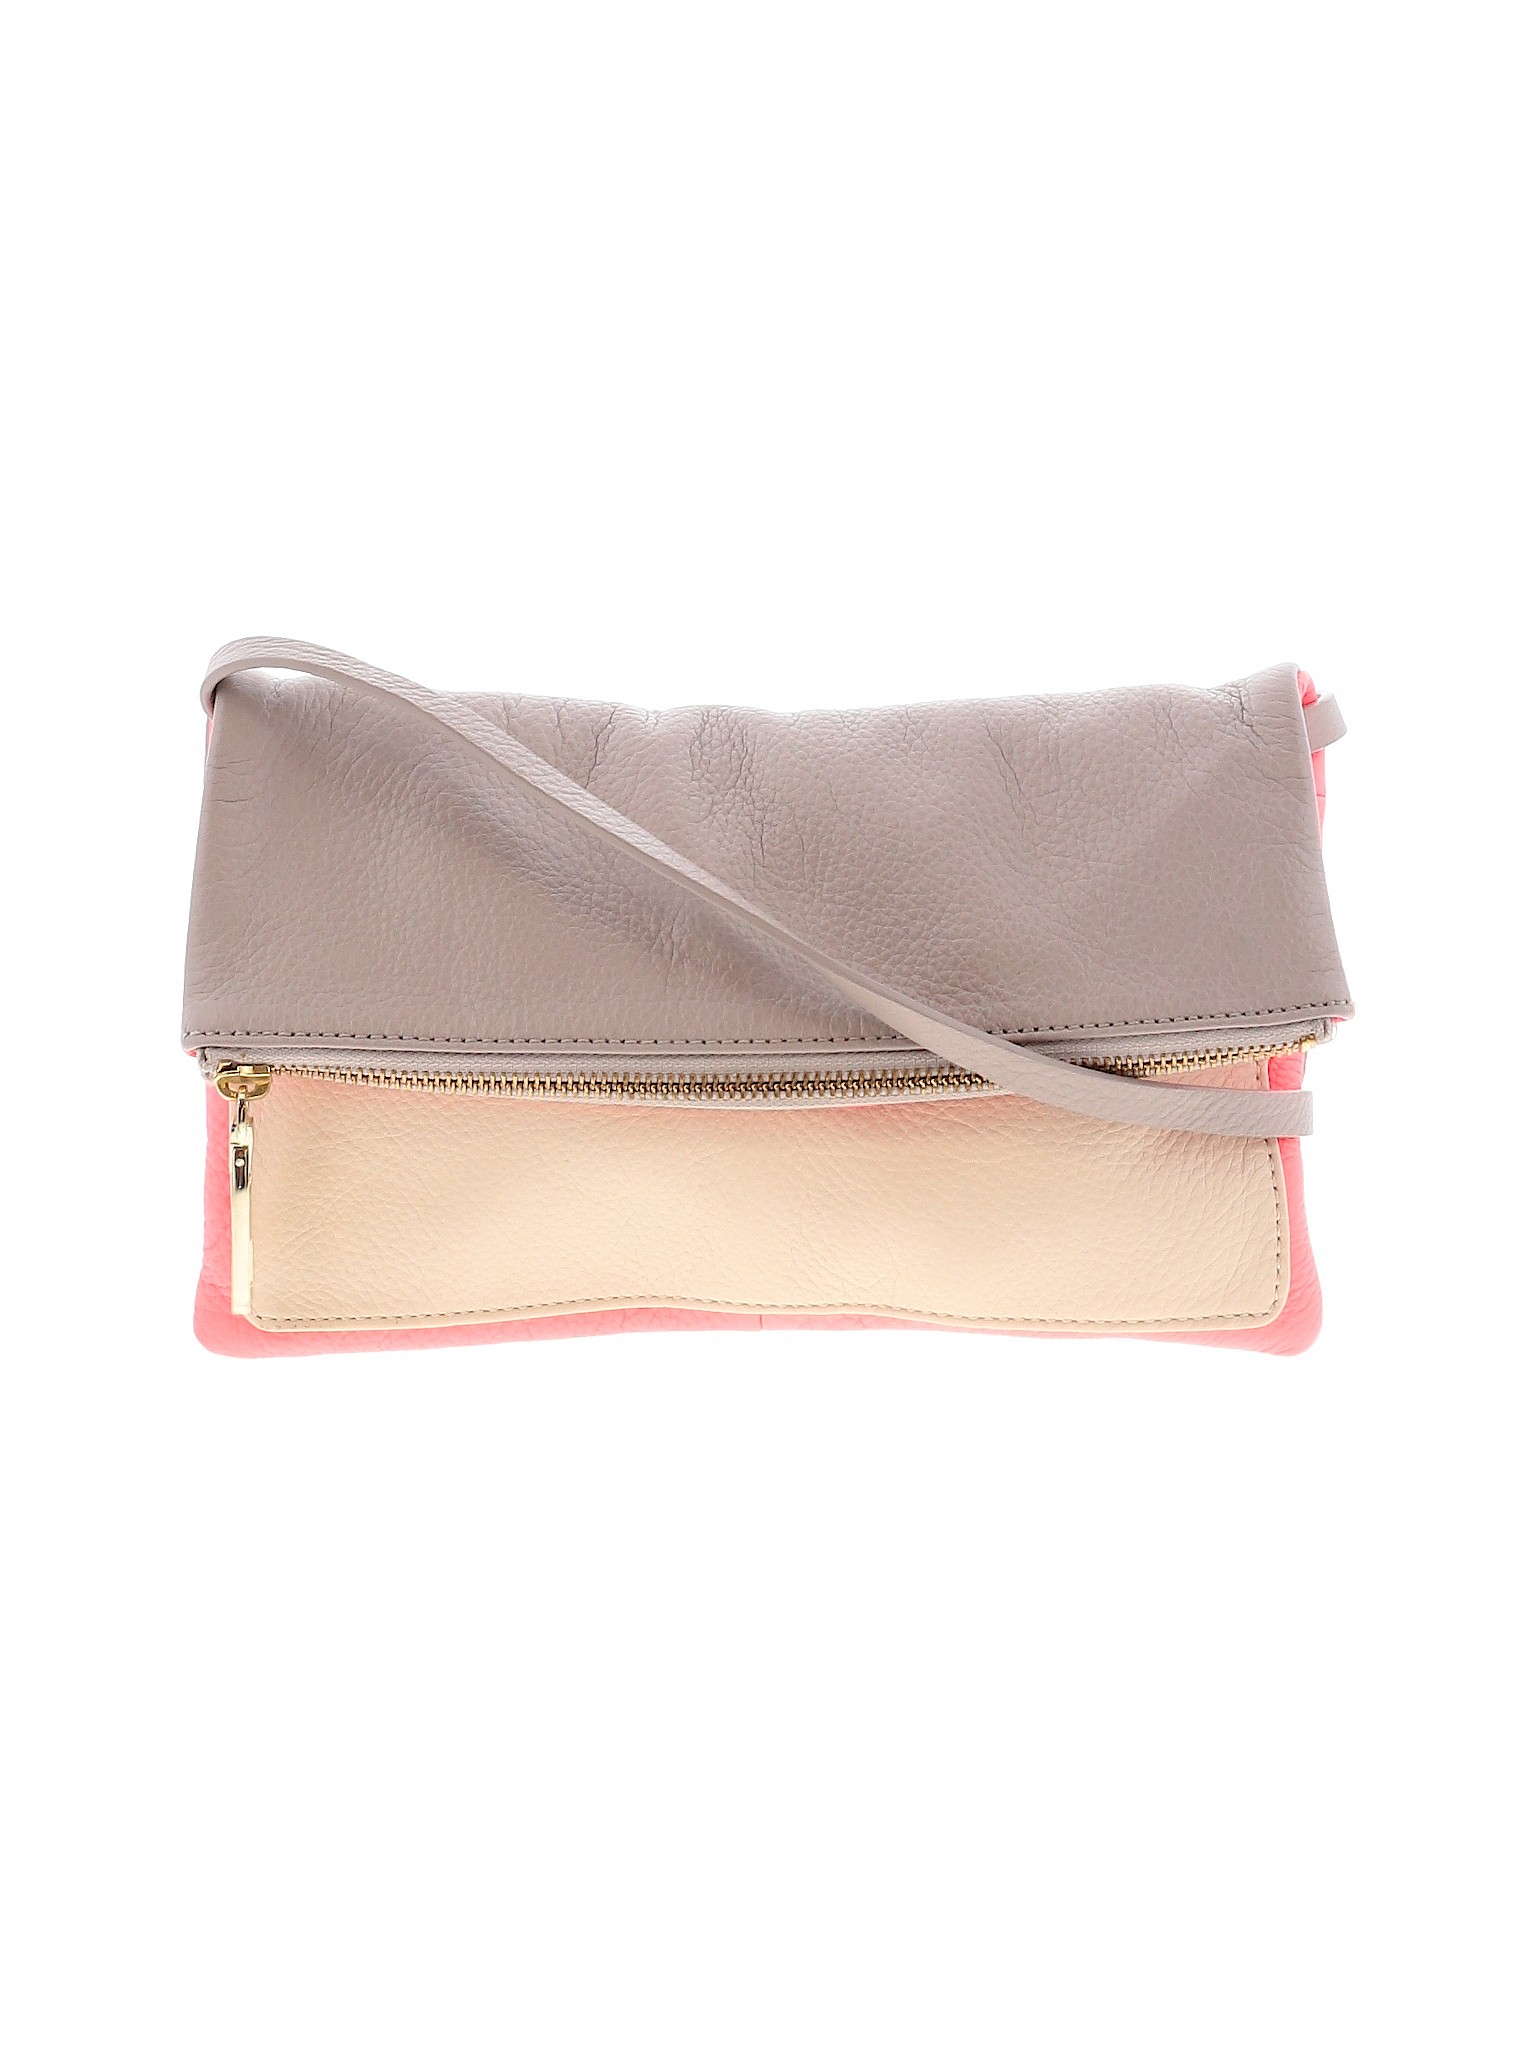 Unbranded Women Brown Crossbody Bag One Size | eBay